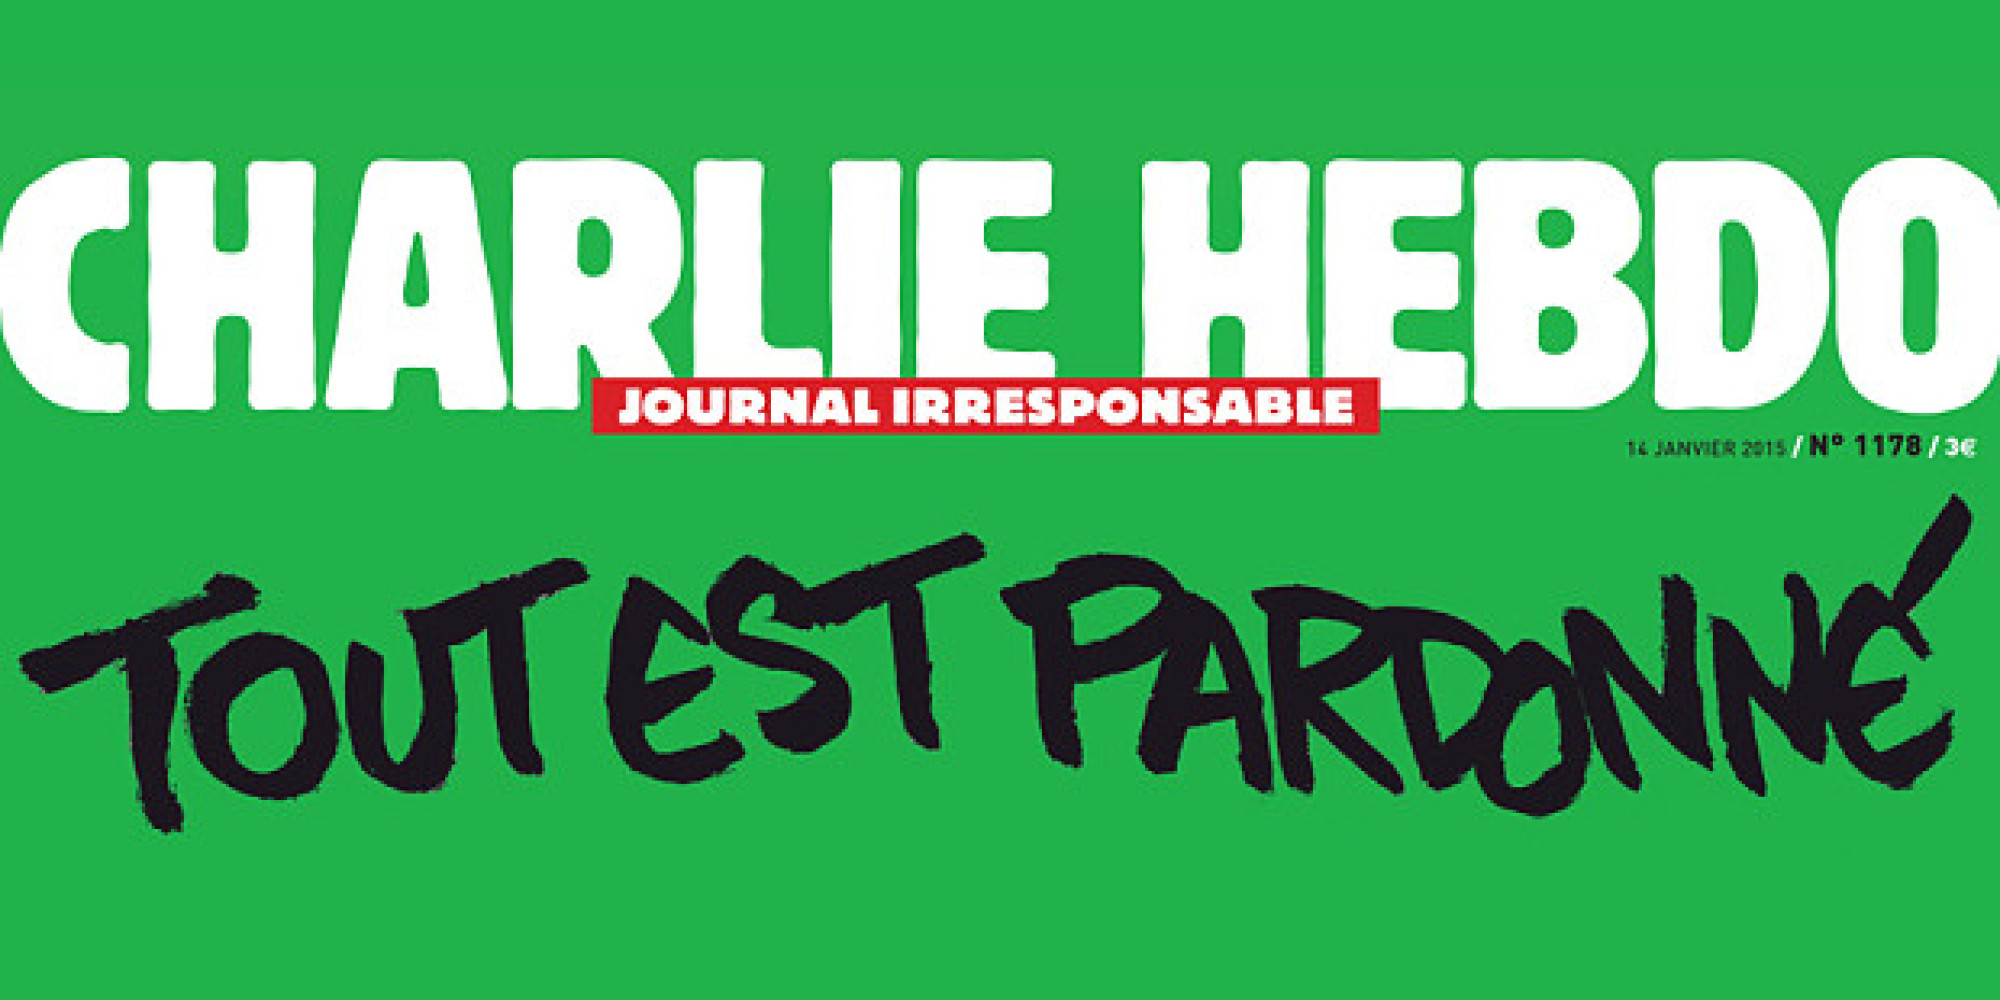 Does Charlie Hebdo Really Represent Free Speech?